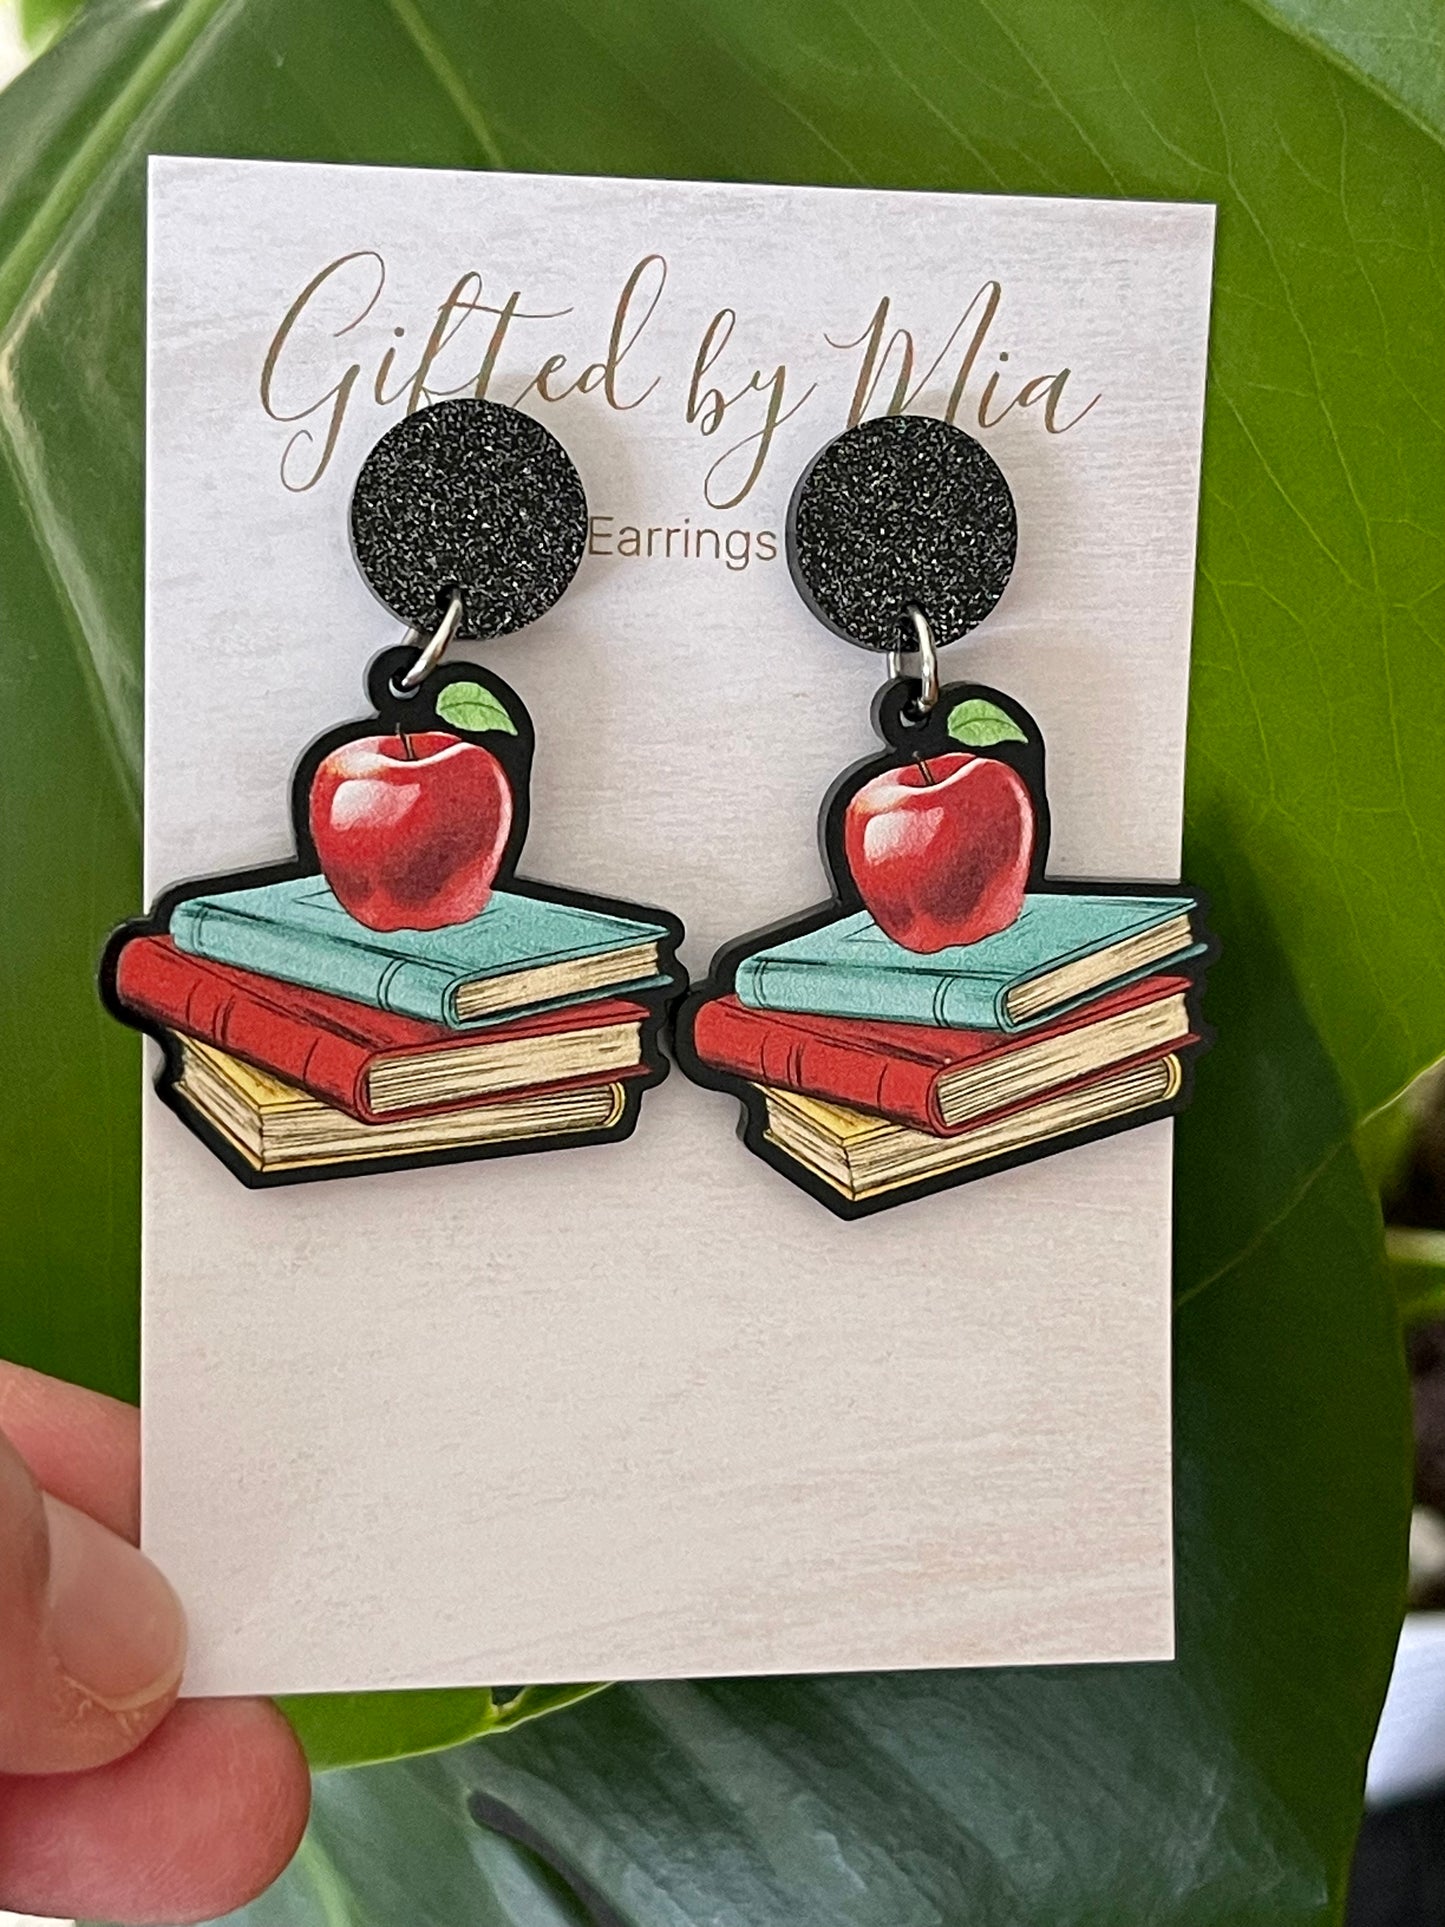 Fun novelty earrings for teachers